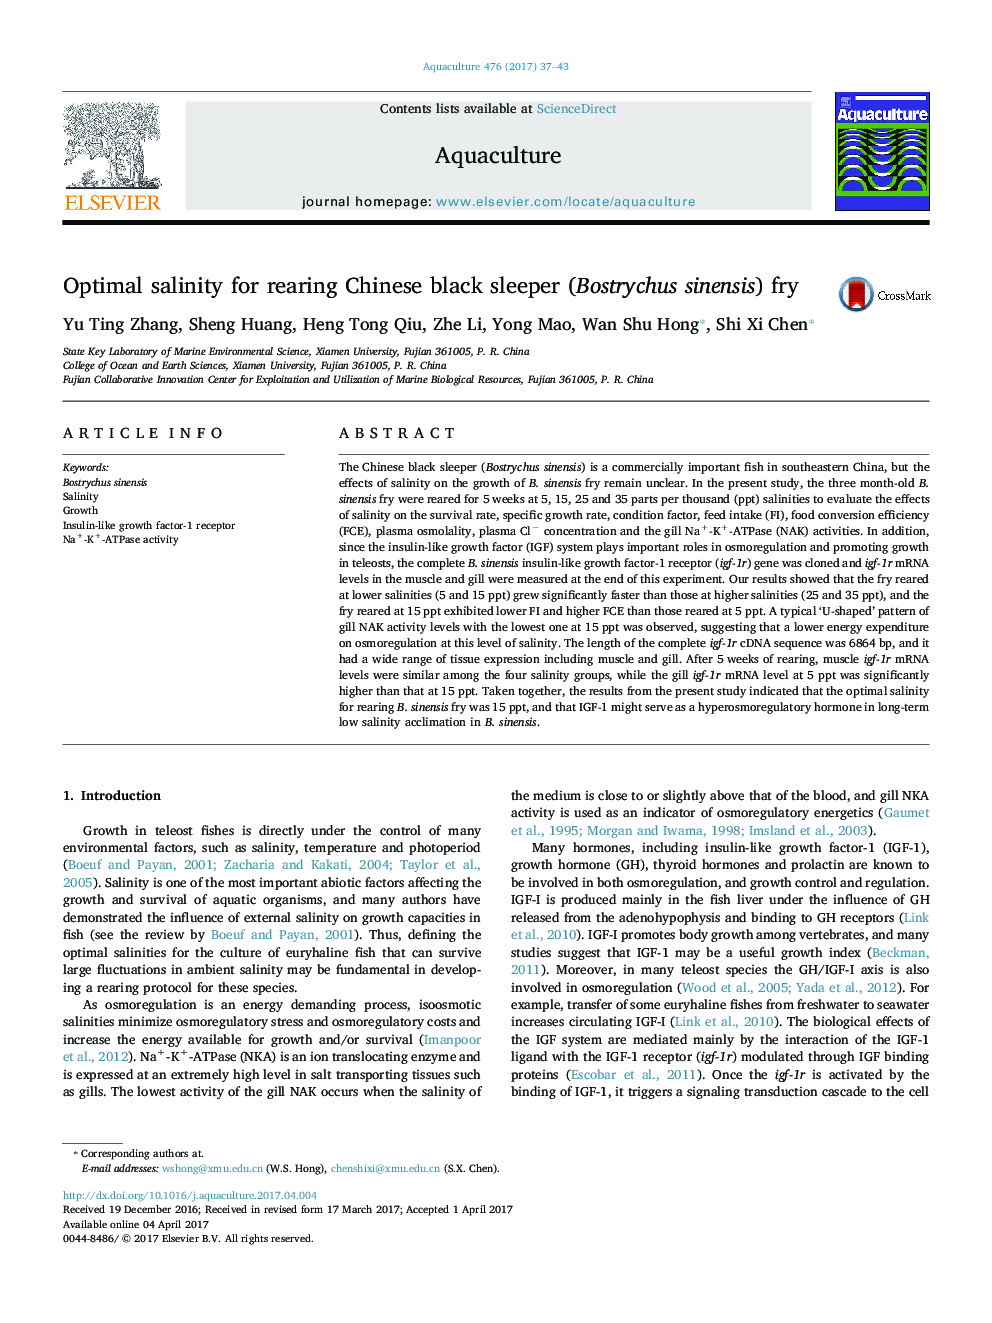 Optimal salinity for rearing Chinese black sleeper (Bostrychus sinensis) fry